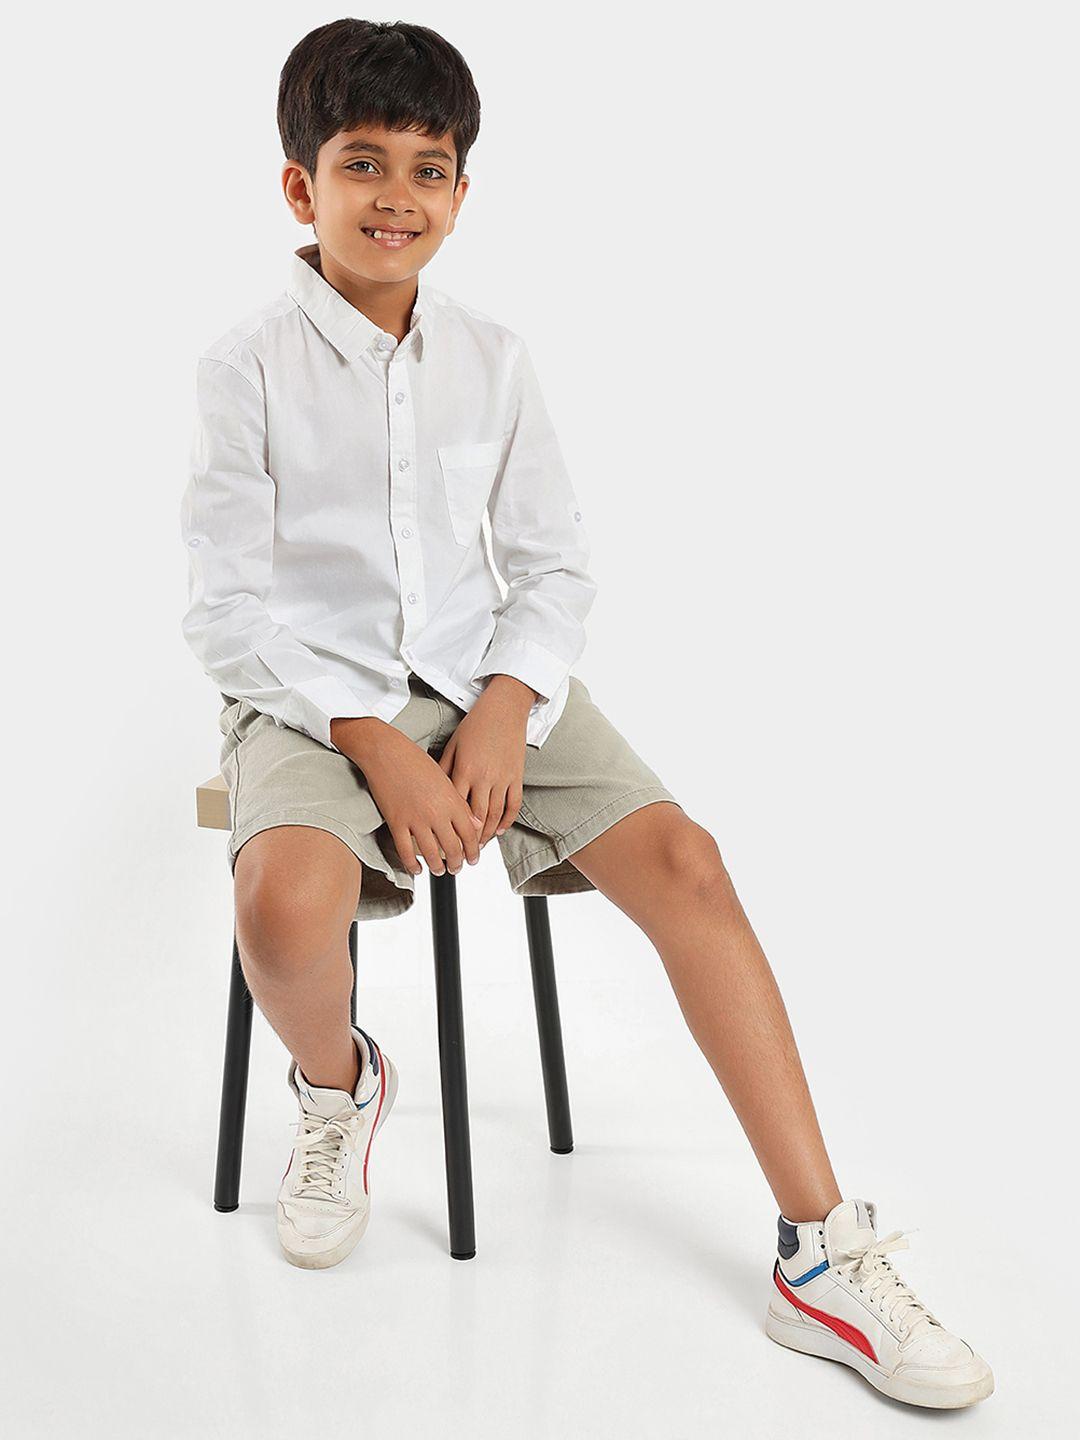 lilpicks boys spread collar cotton smart casual shirt